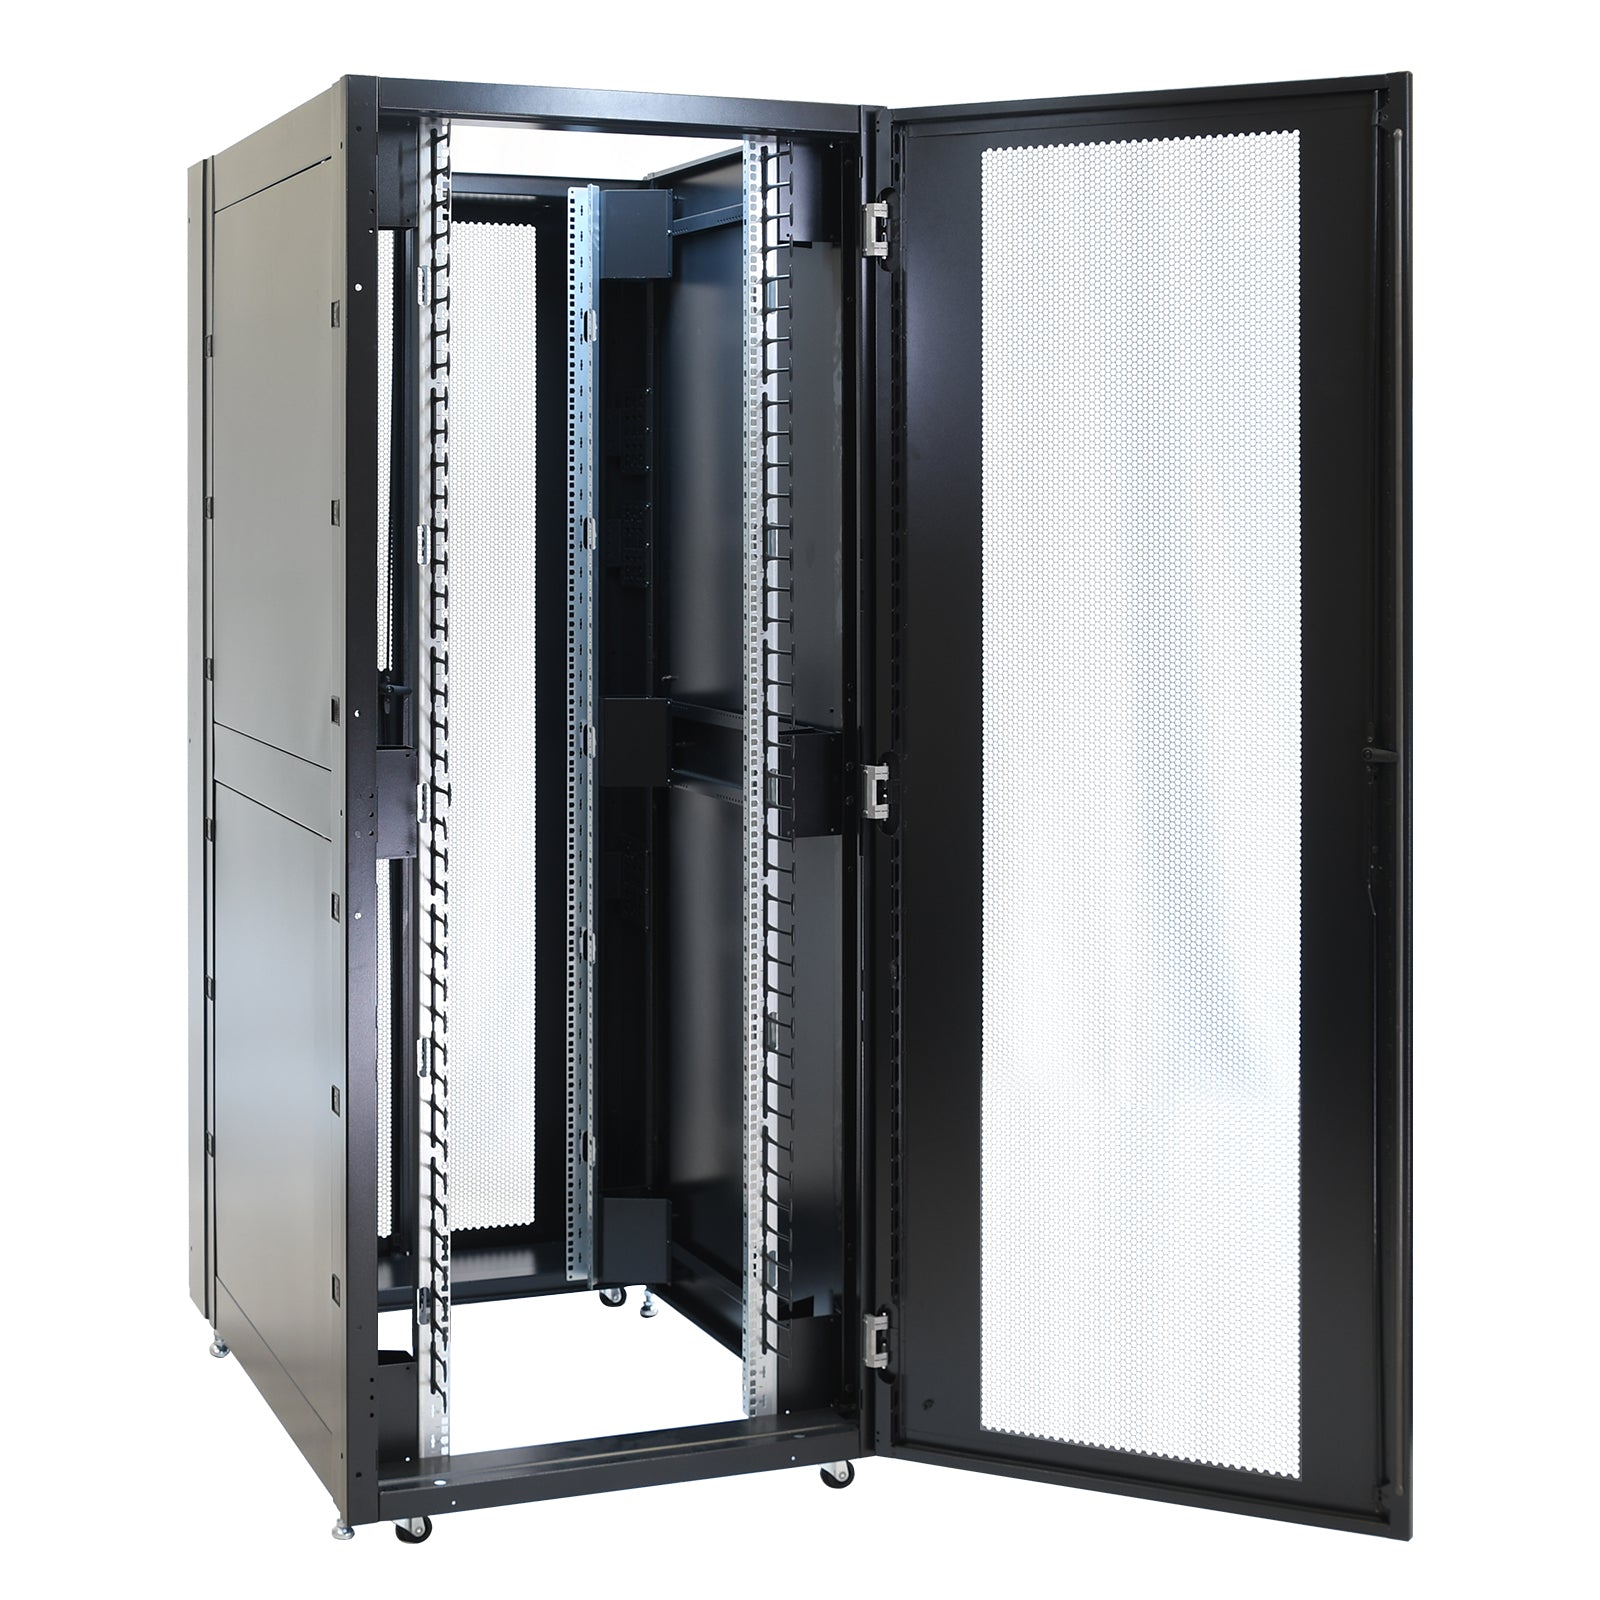 Aeons NetMax PF Seires 42U Premium Server Rack Enclosure Cabinet, Extra-Depth Extra-Wide, Secure Modular Data Center